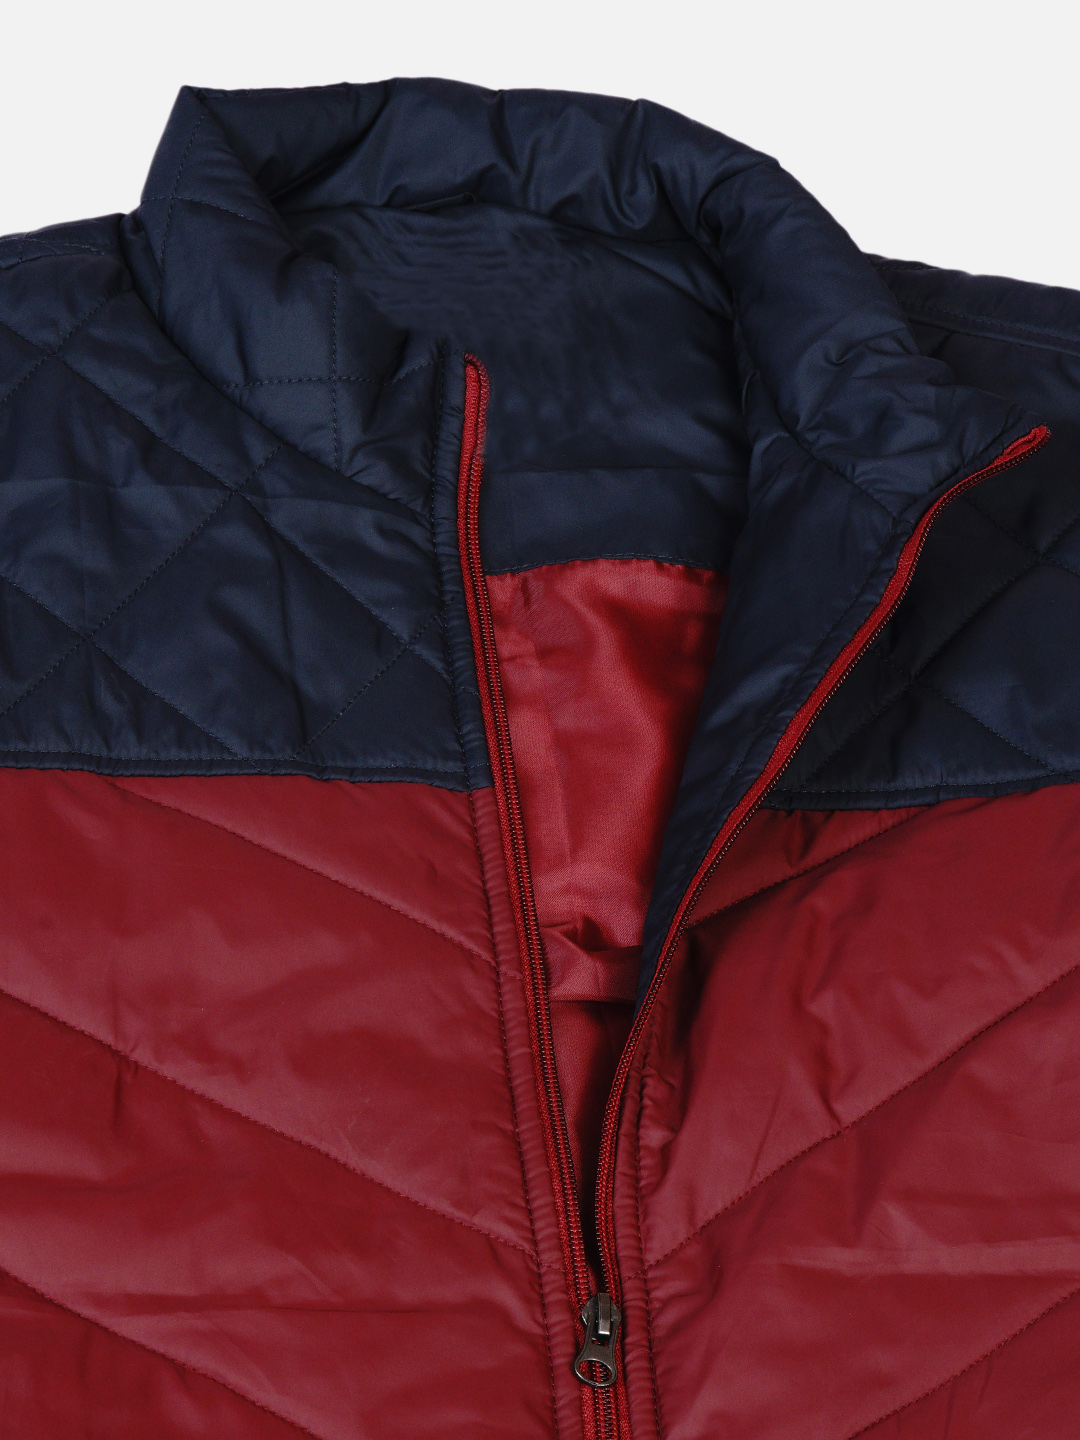 winterwear/jackets/JPJKT73011B/jpjkt73011b-2.jpg